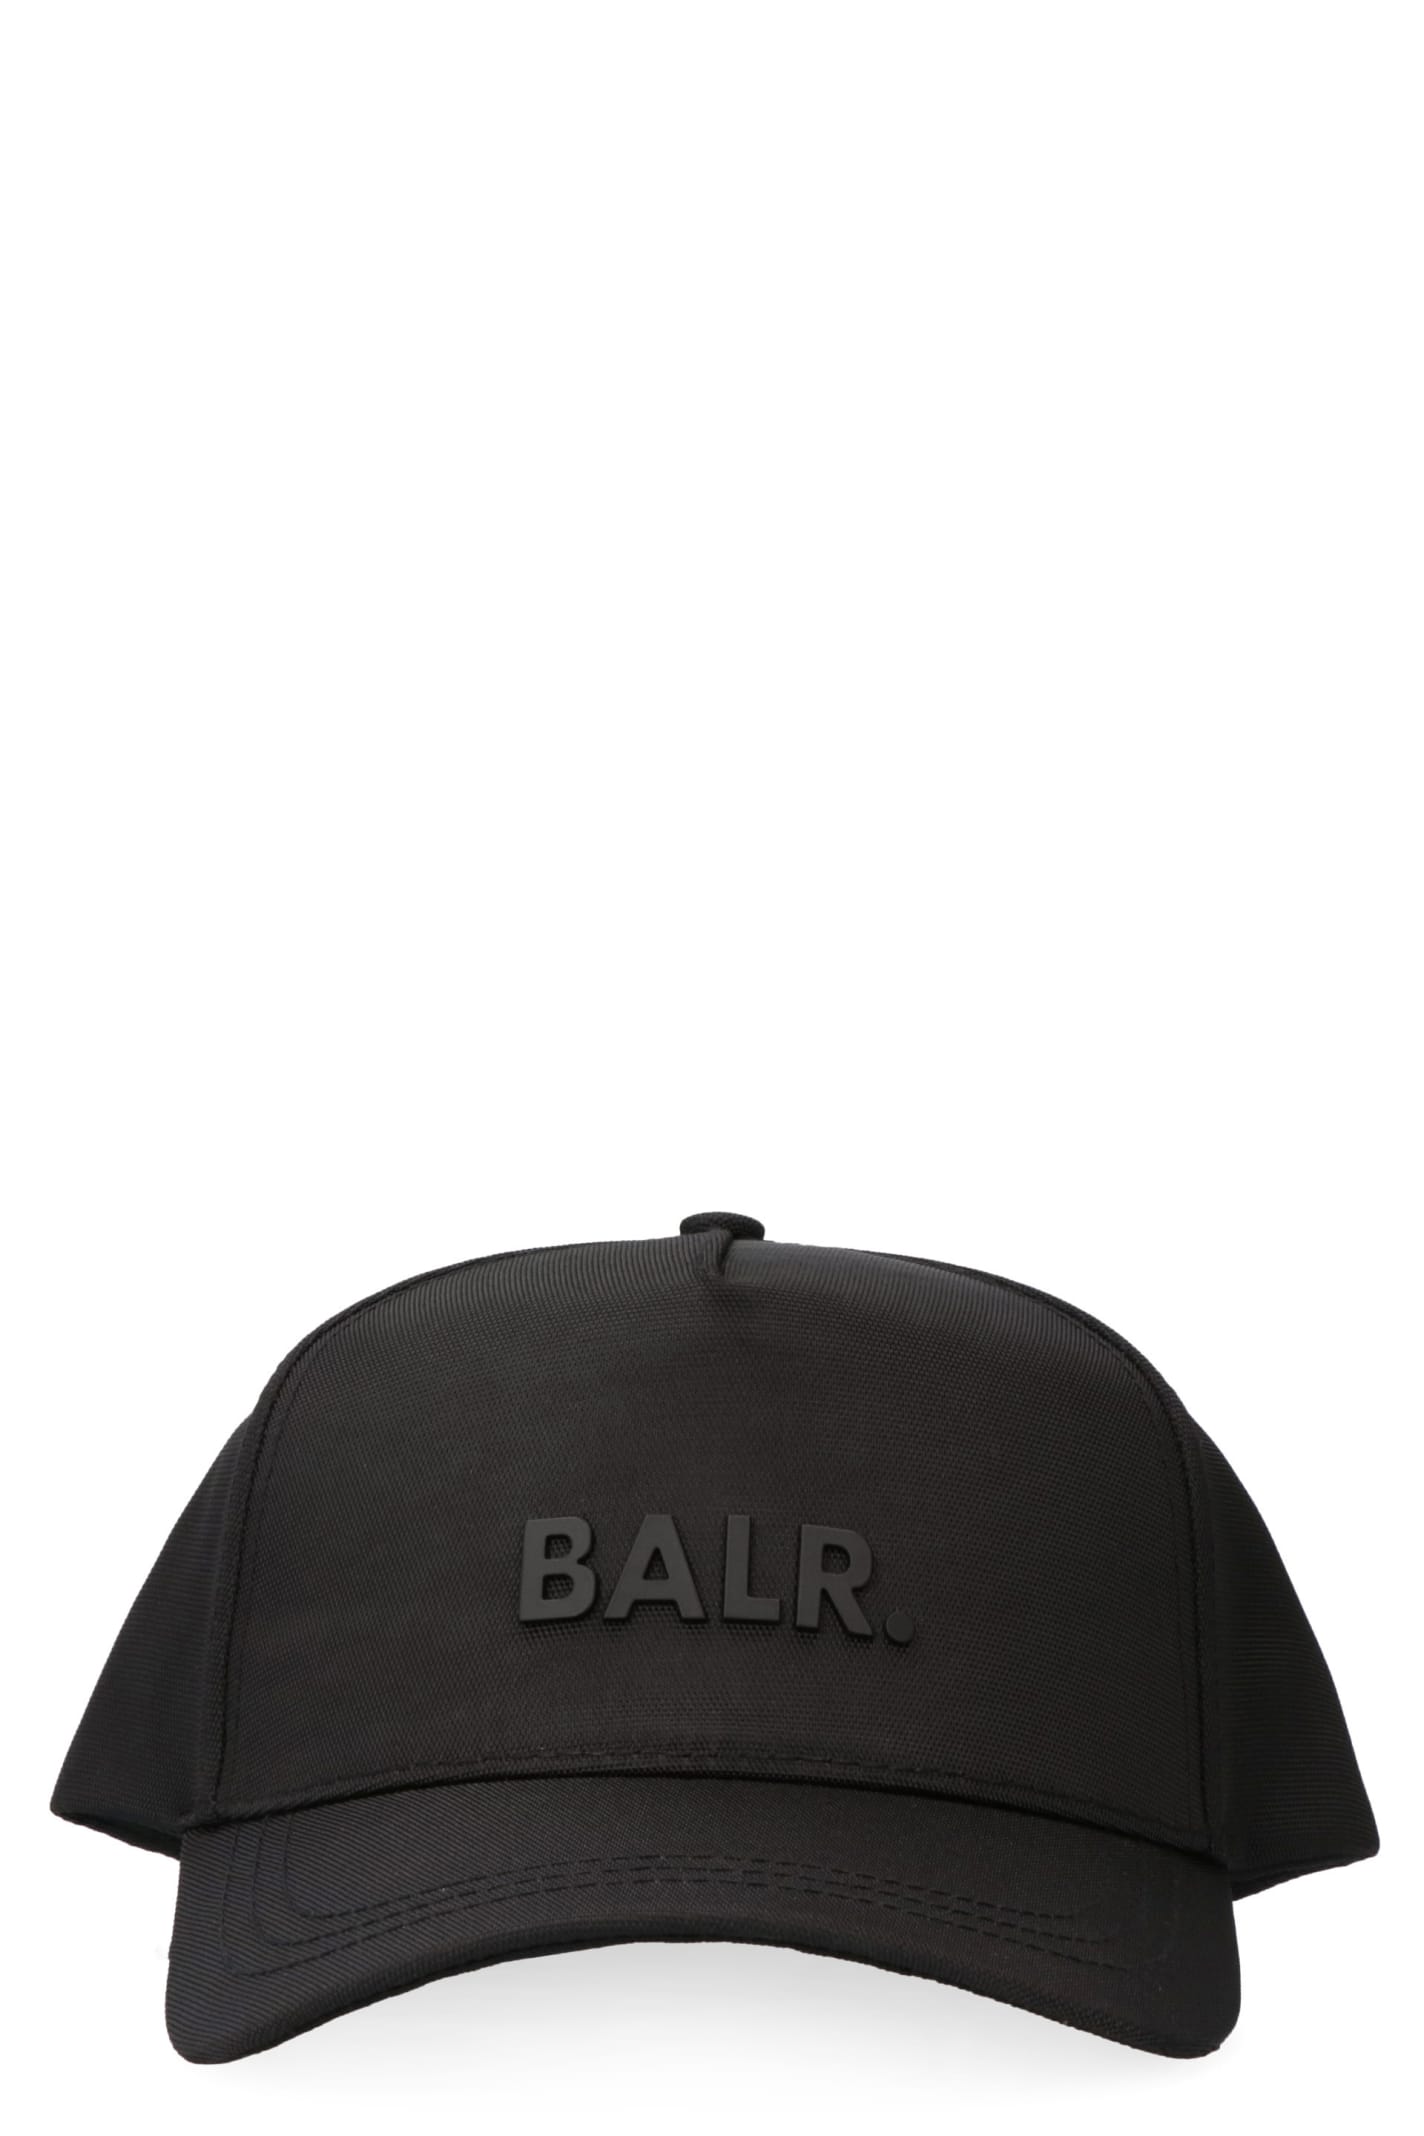 Balr. Logo Baseball Cap In Black | ModeSens